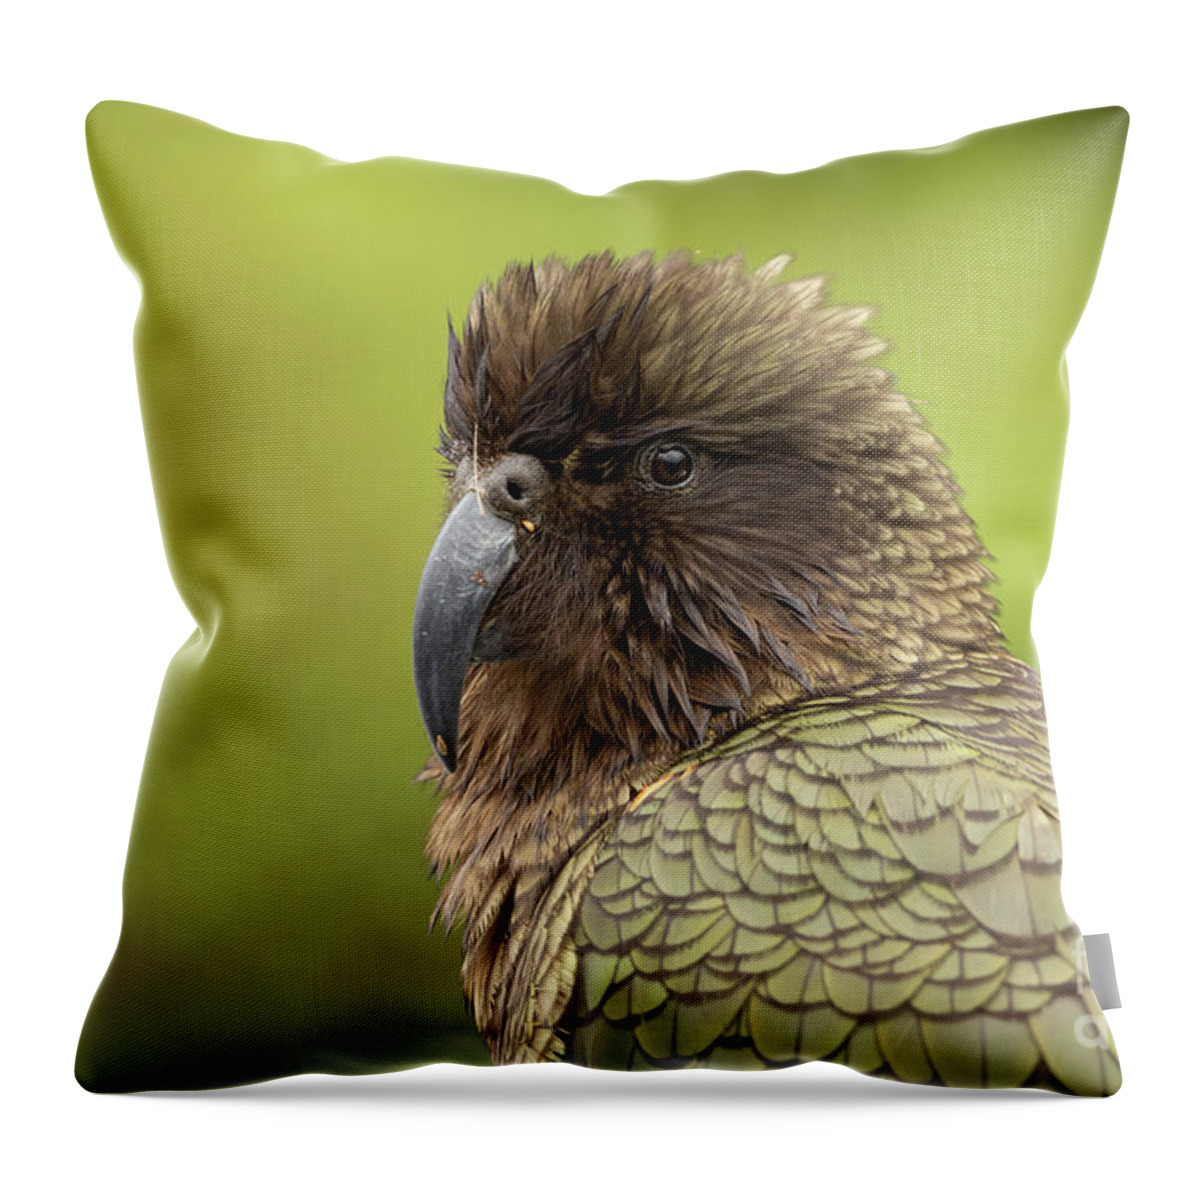 Kea Throw Pillow featuring the photograph Kea,a native bird of NZ at Milford Sound by Eva Lechner